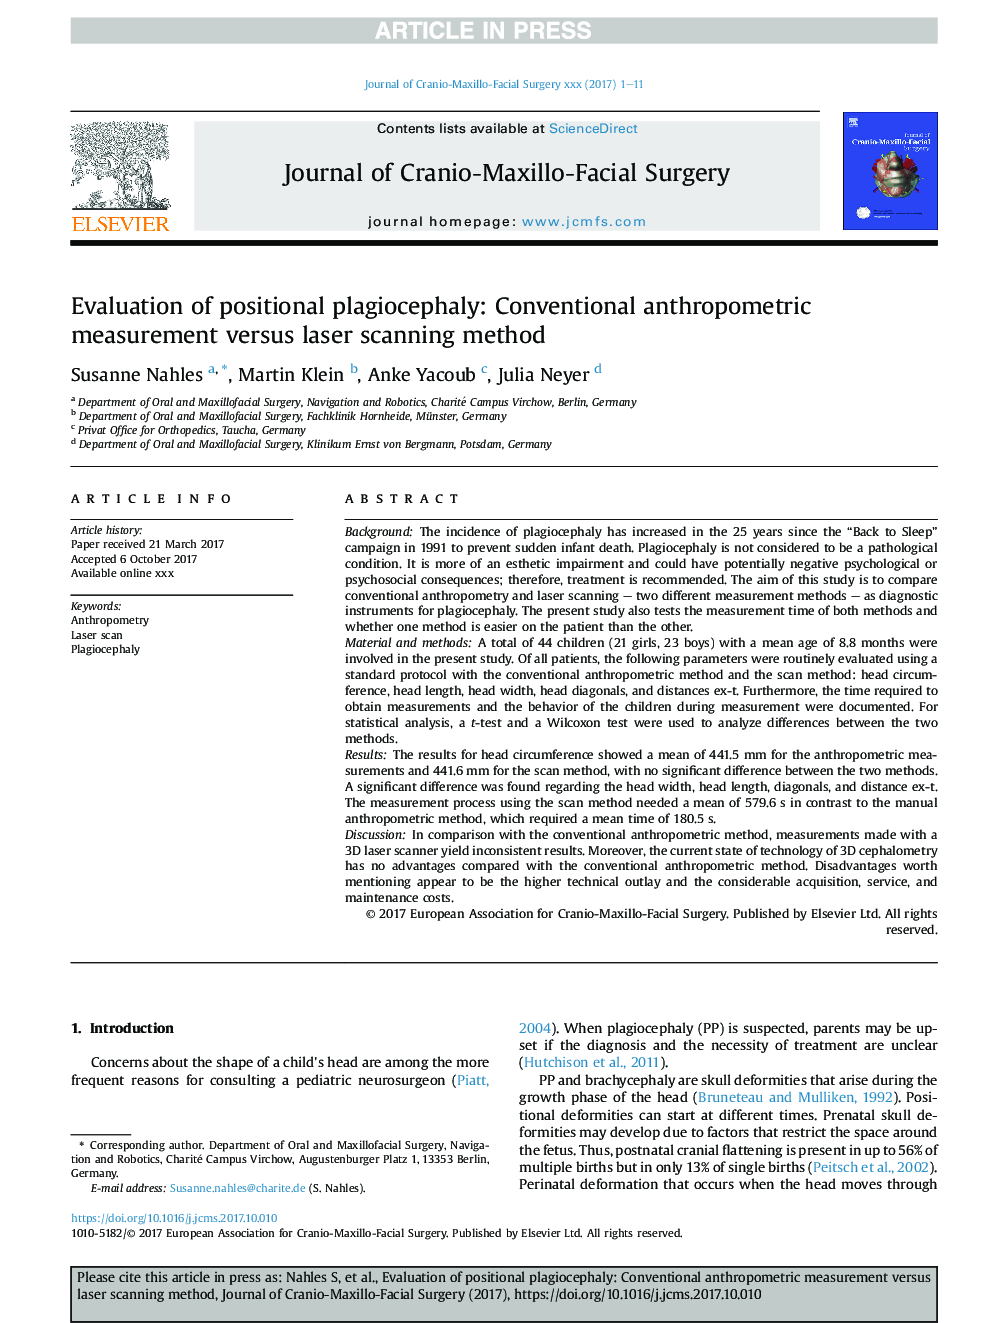 Evaluation of positional plagiocephaly: Conventional anthropometric measurement versus laser scanning method